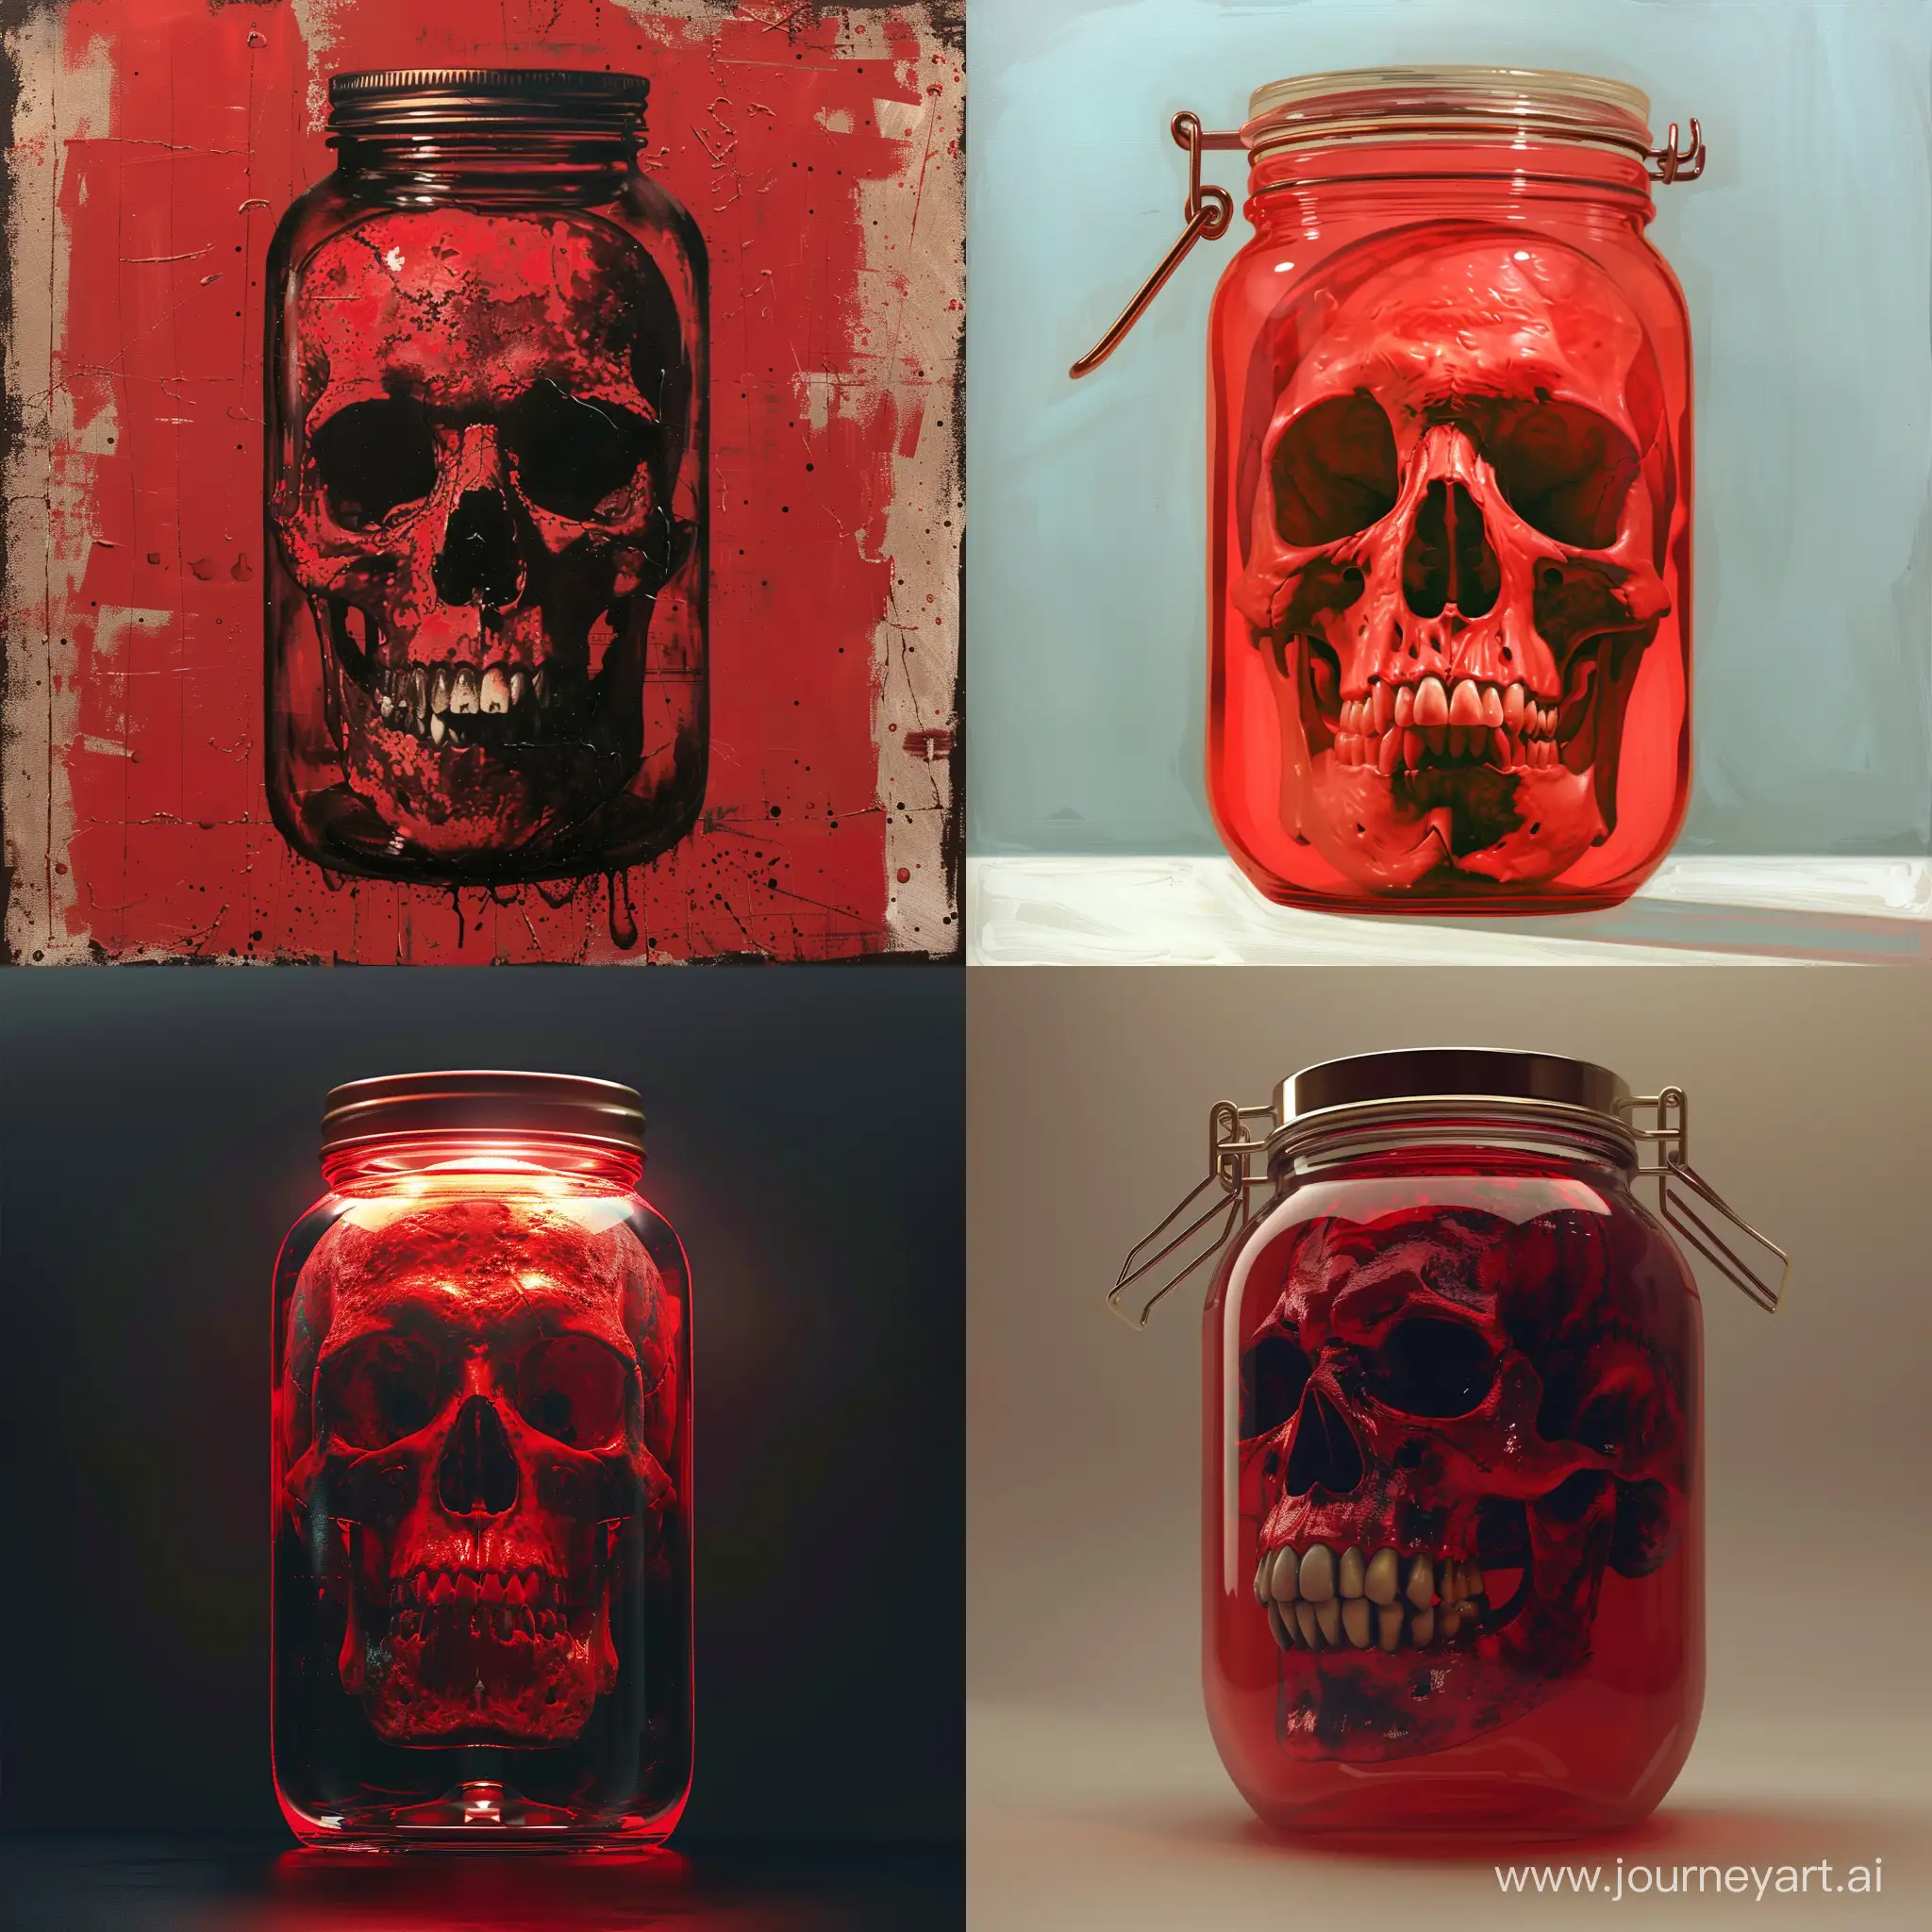 Red skull in a jar